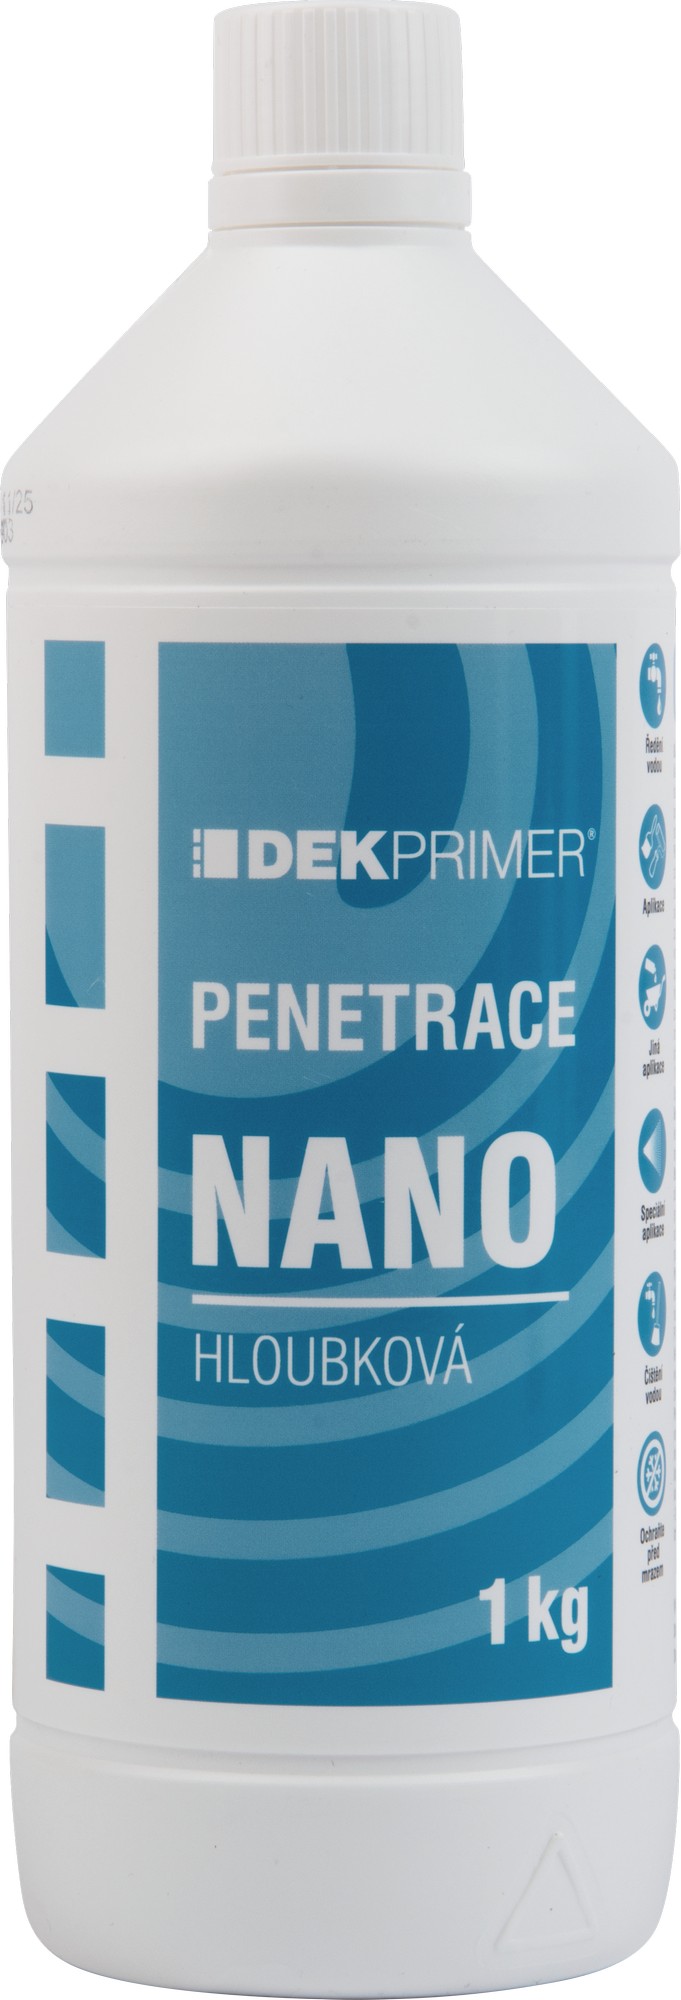 Penetrace hloubková DEKPRIMER NANO , 1 kg/bal.